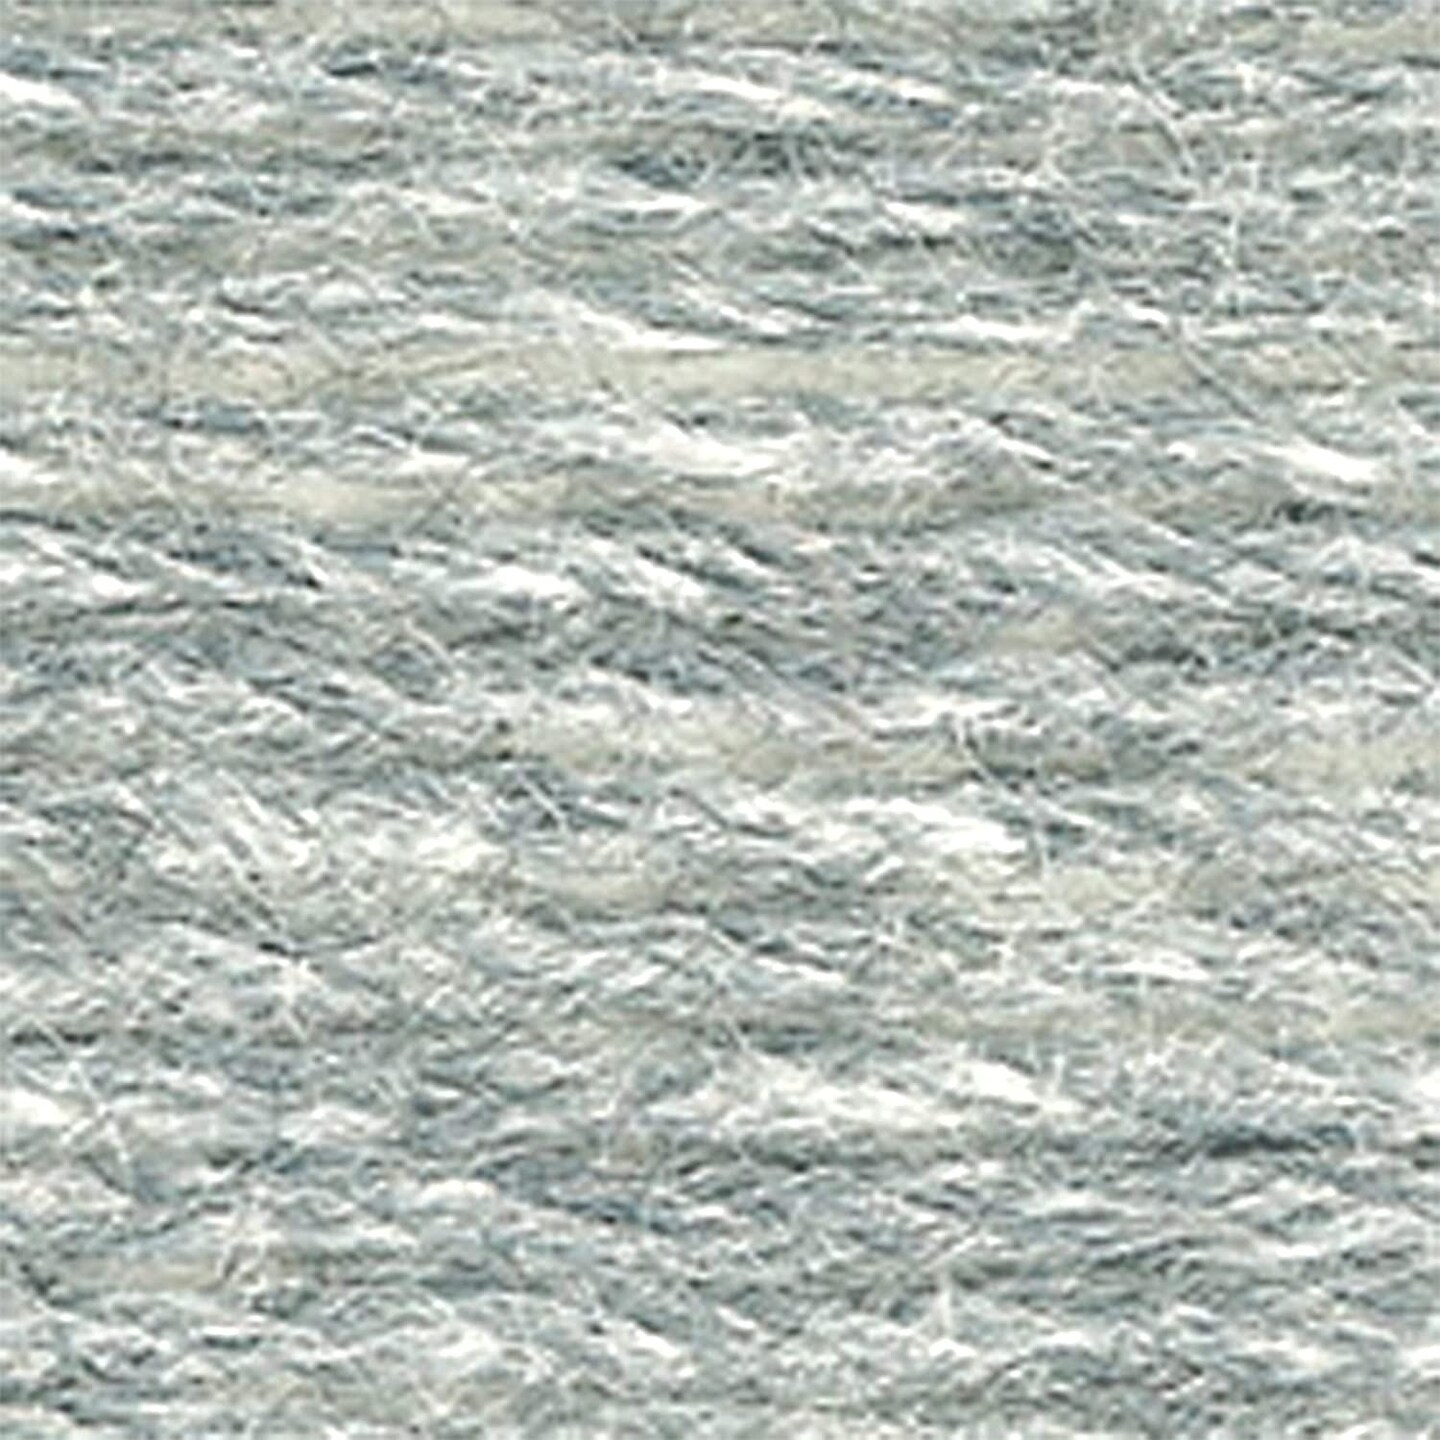 Lion Brand Wool-Ease Yarn -Grey Heather 